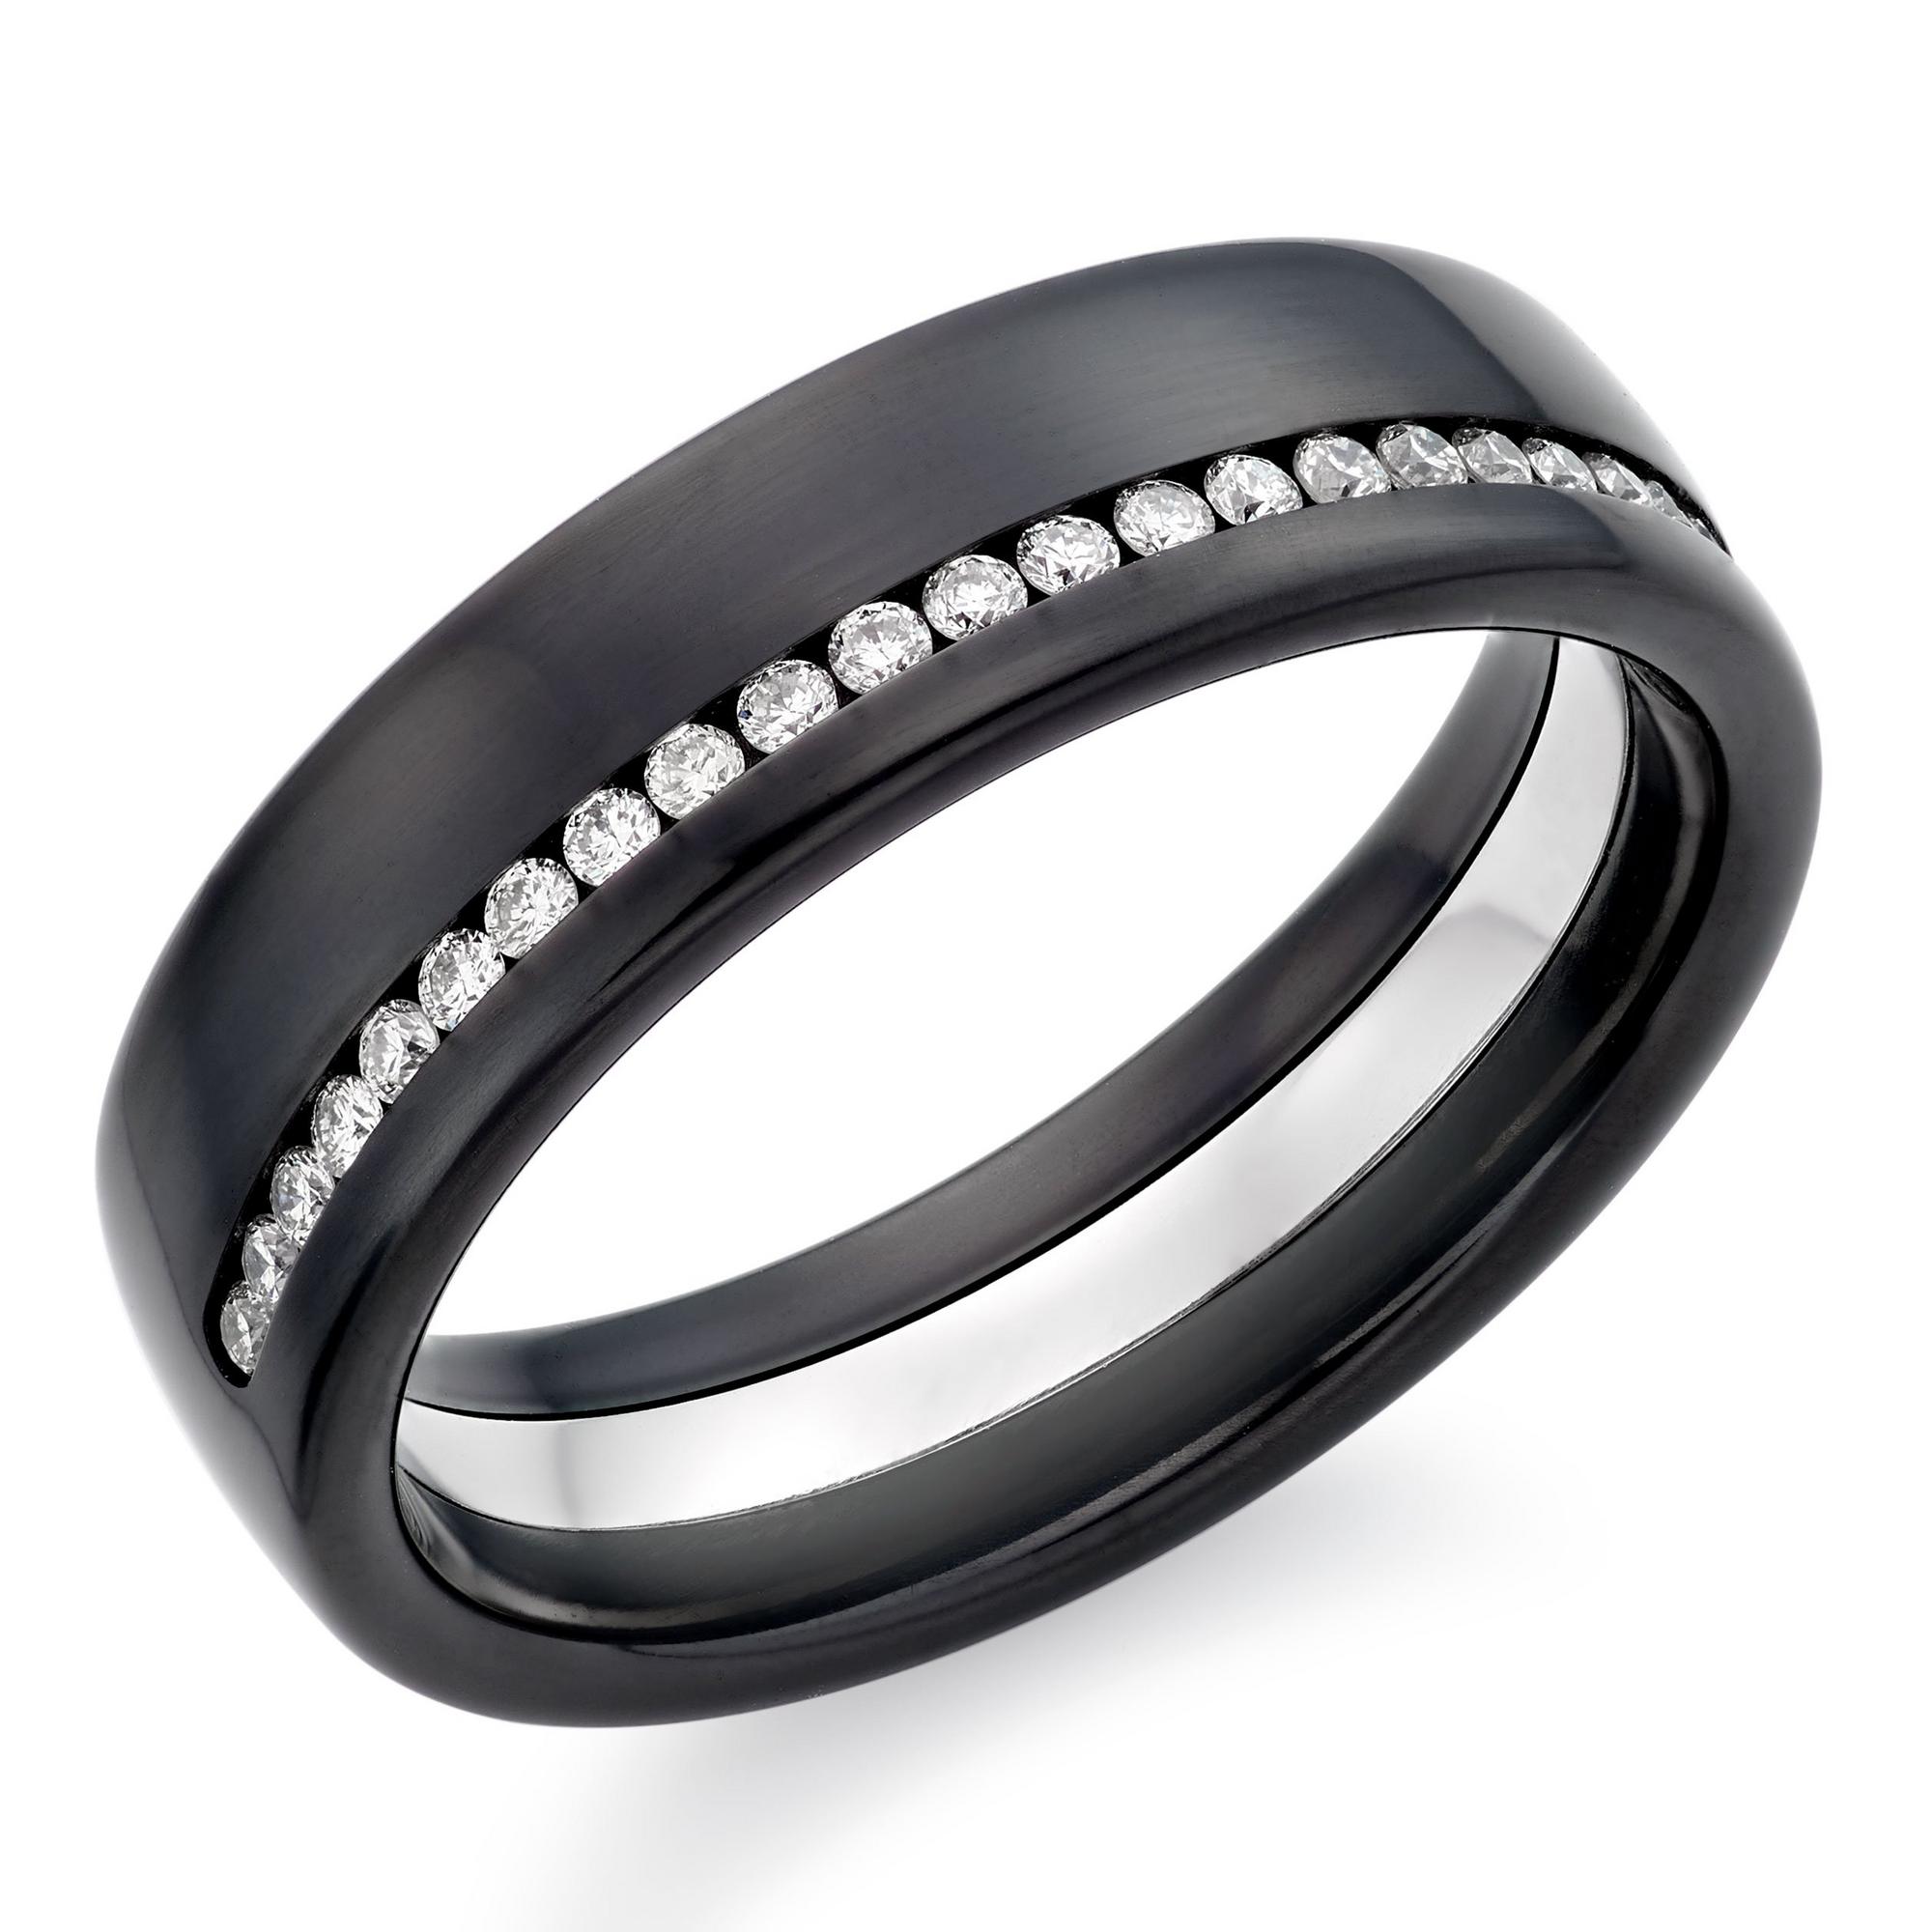 Platinum and Zirconium Men’s Diamond Wedding Ring